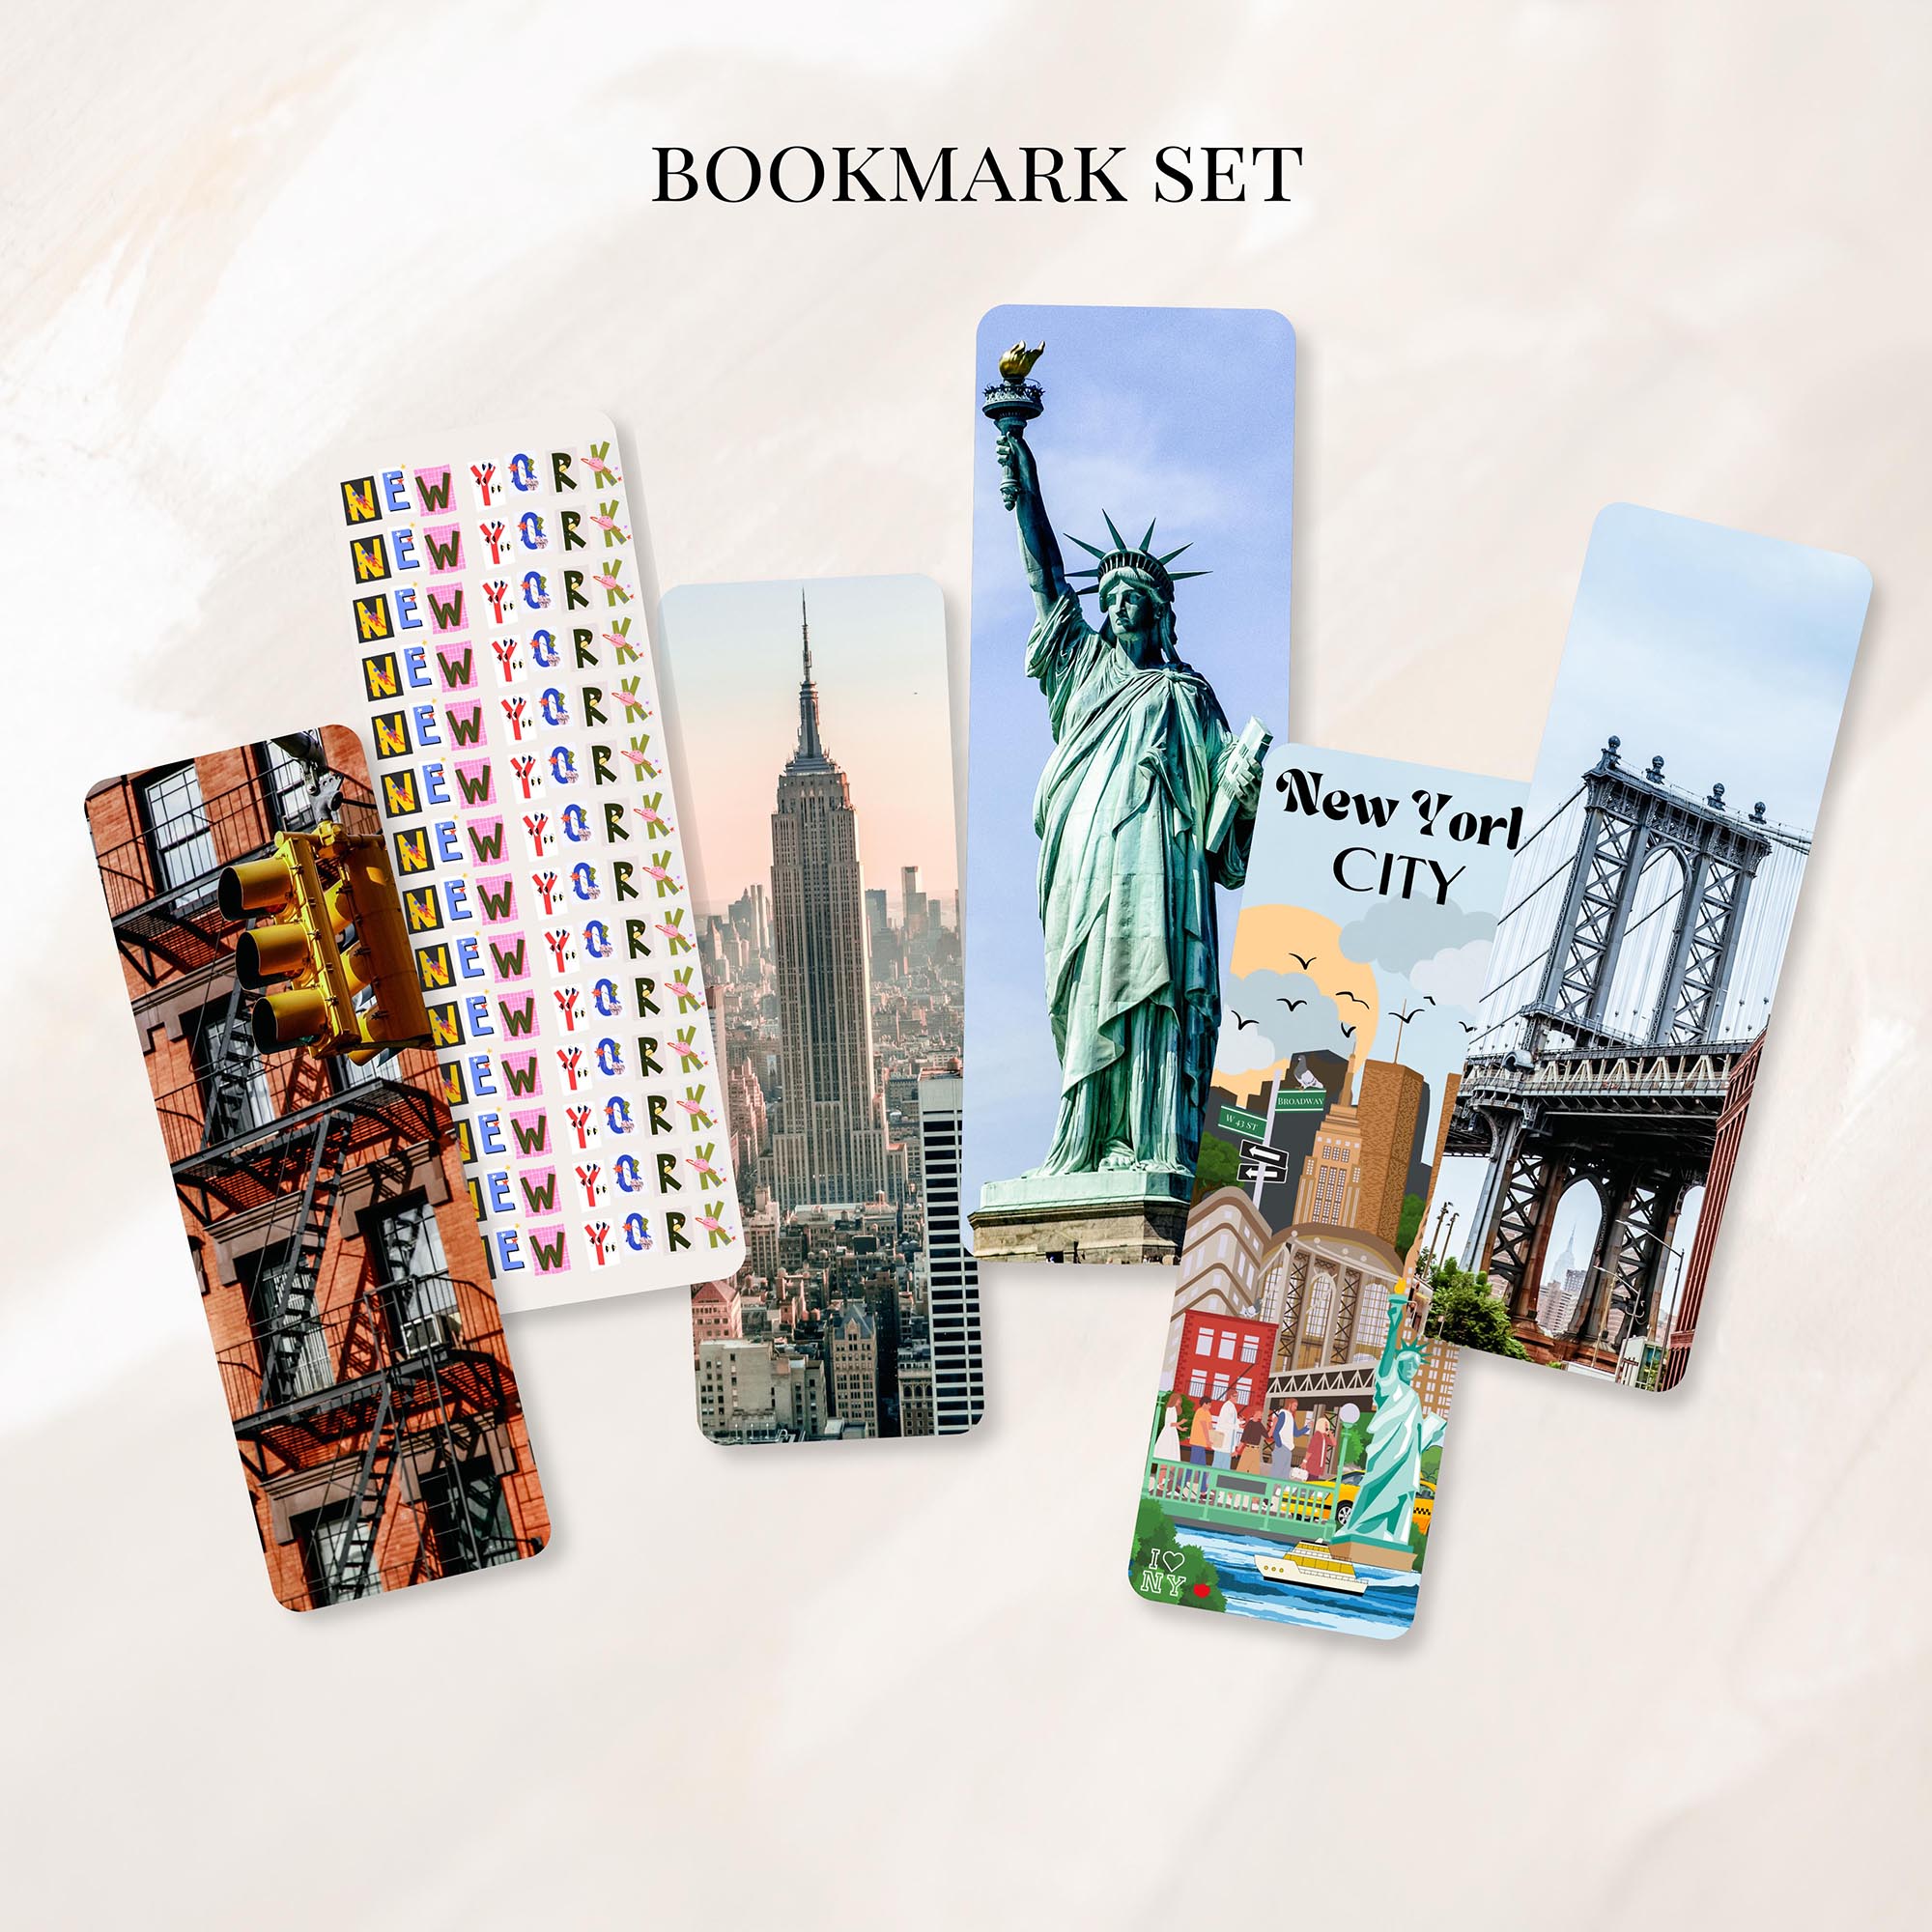 New York bookmarks